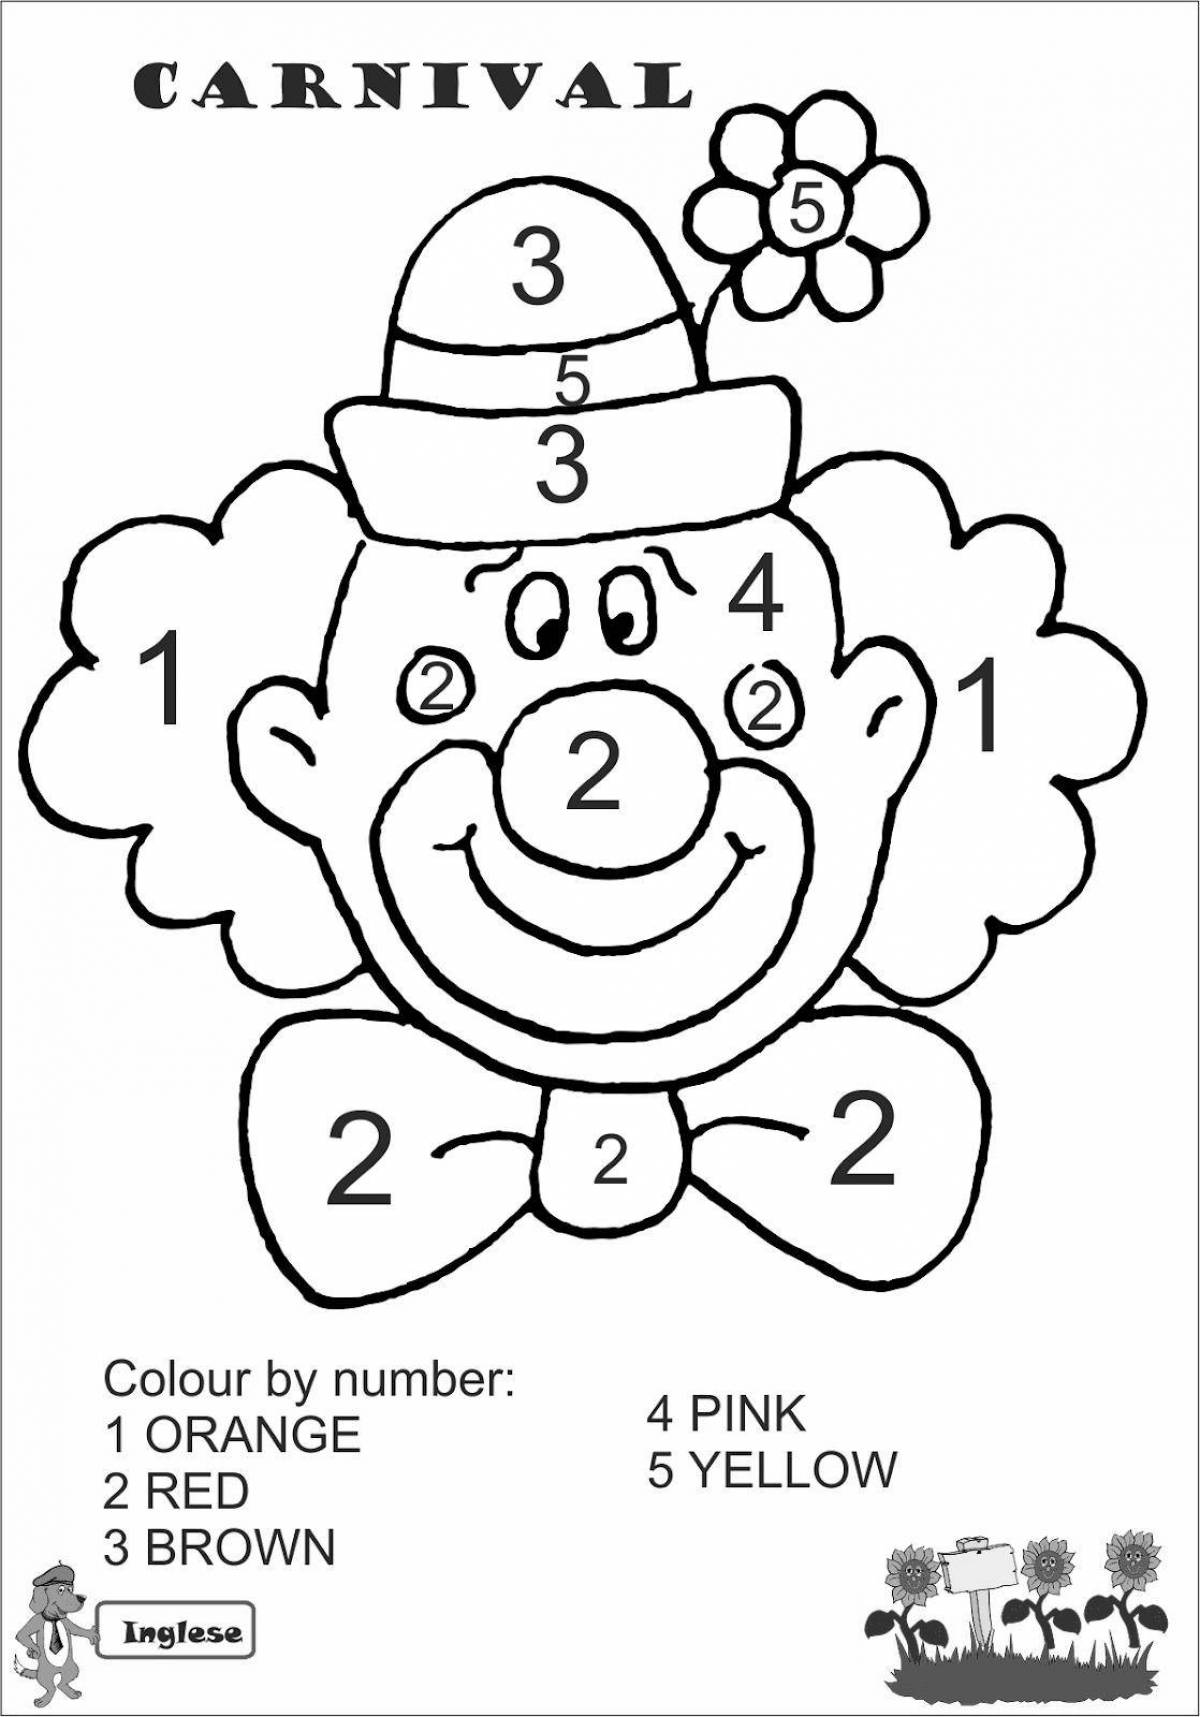 A fun clown coloring book for preschoolers